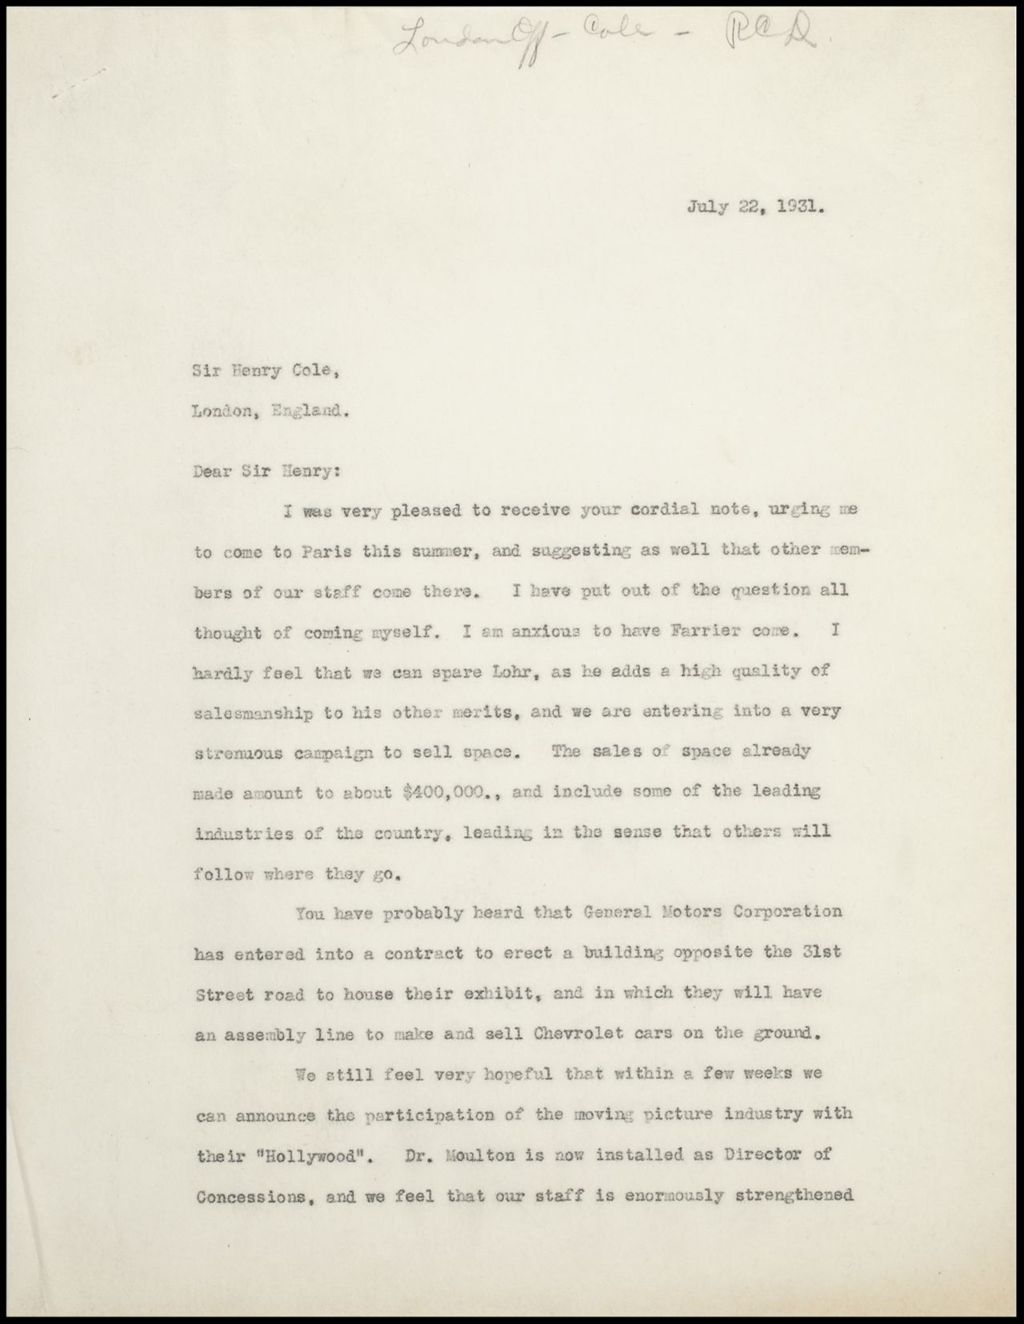 London office - Cole, Henry (correspondence with Dawes), 1930-1931 (Folder 11-159)